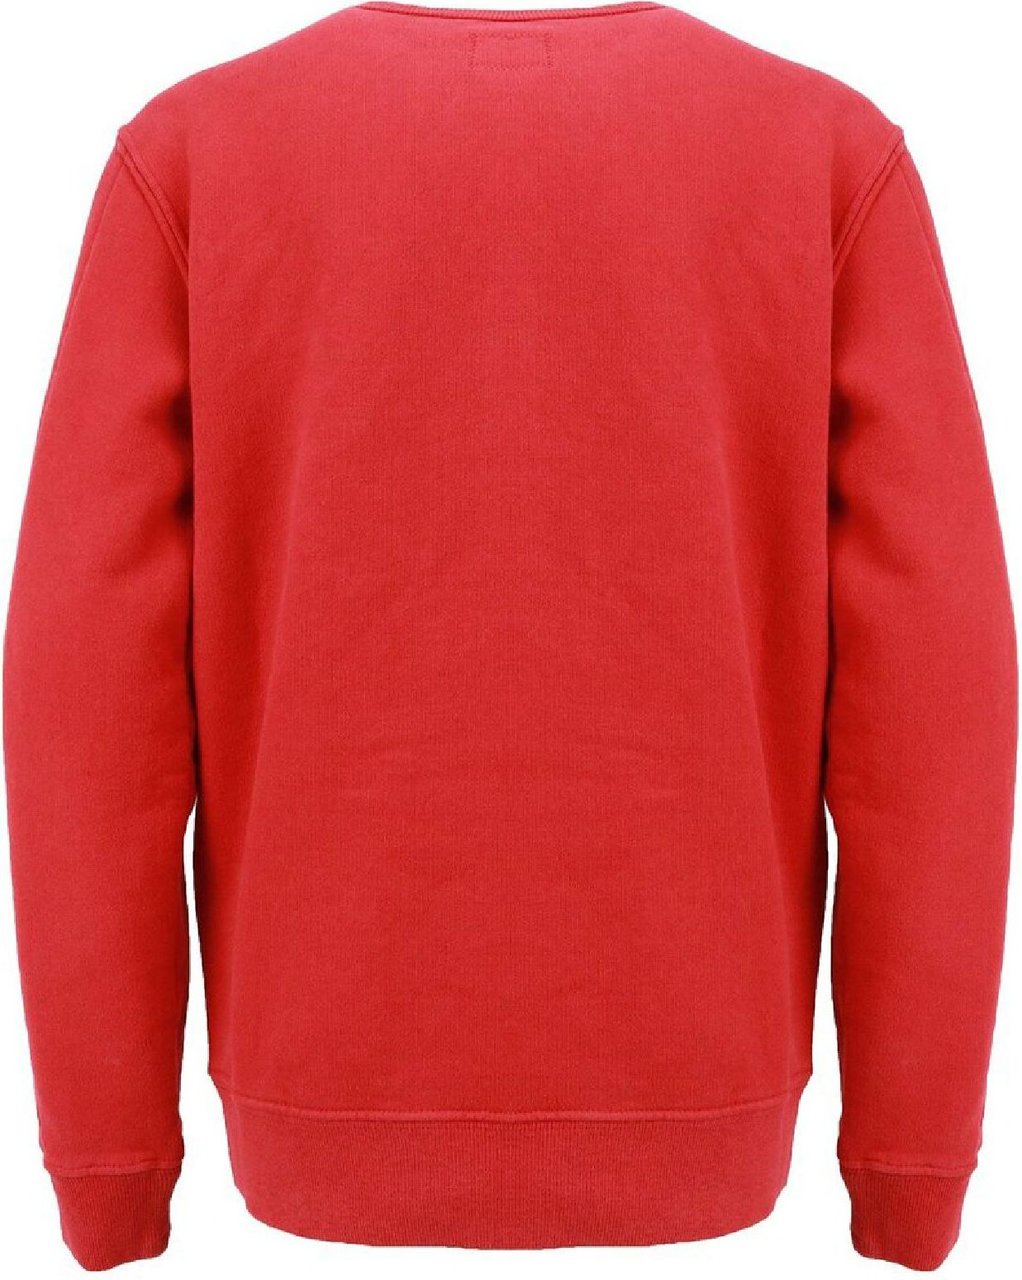 CP Company Sweatshirt basic crew rood Rood